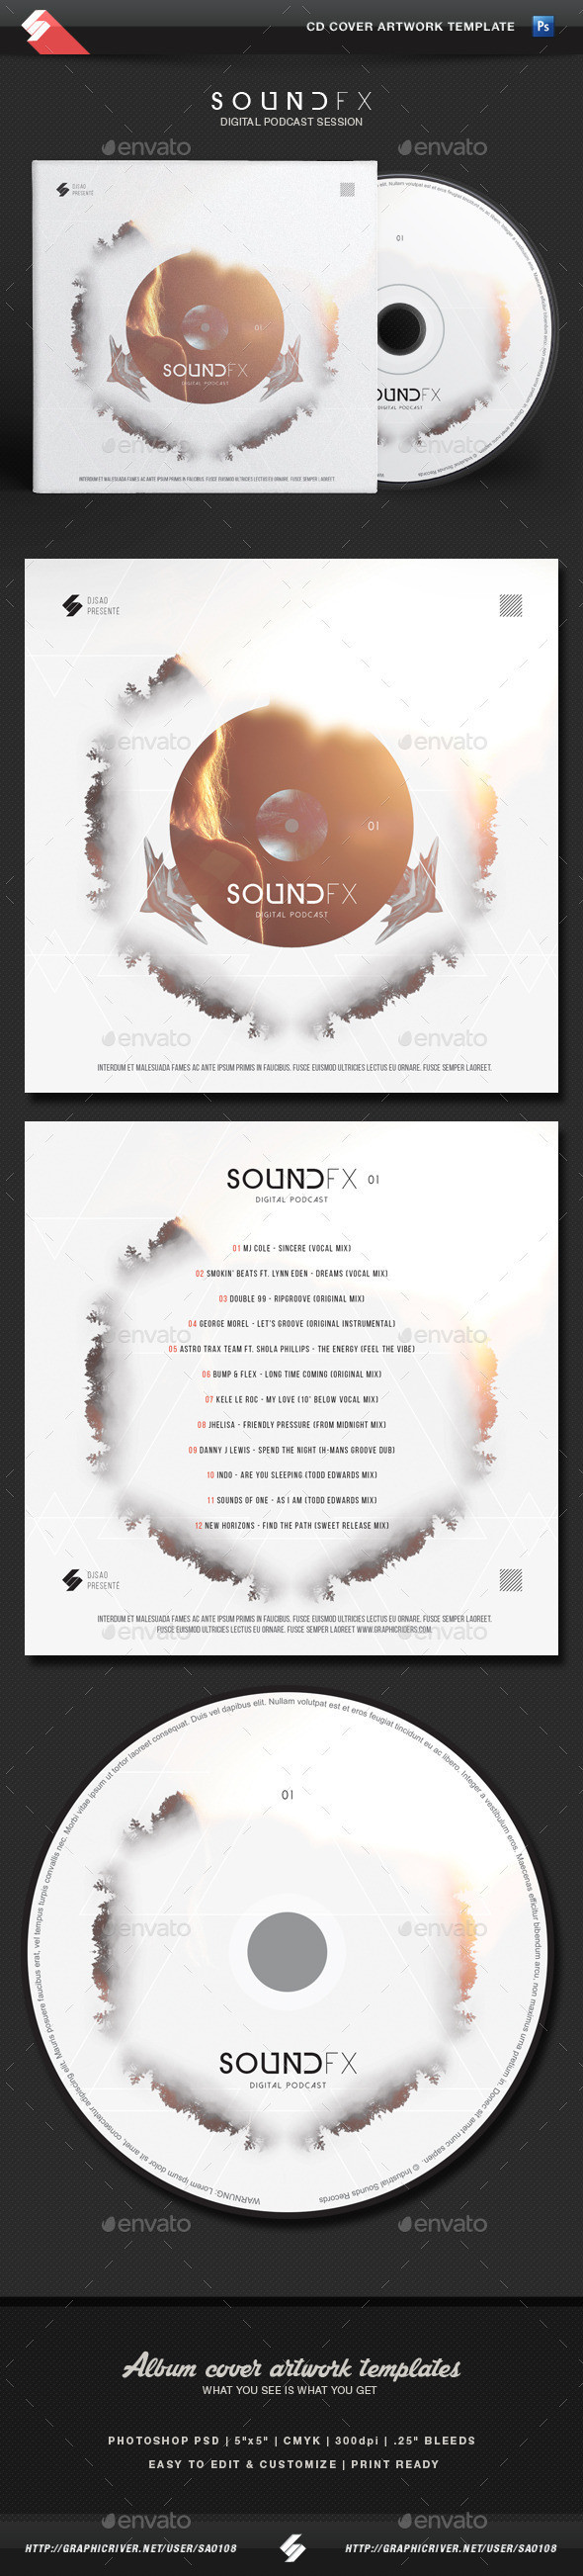 Soundfx cd cover template preview